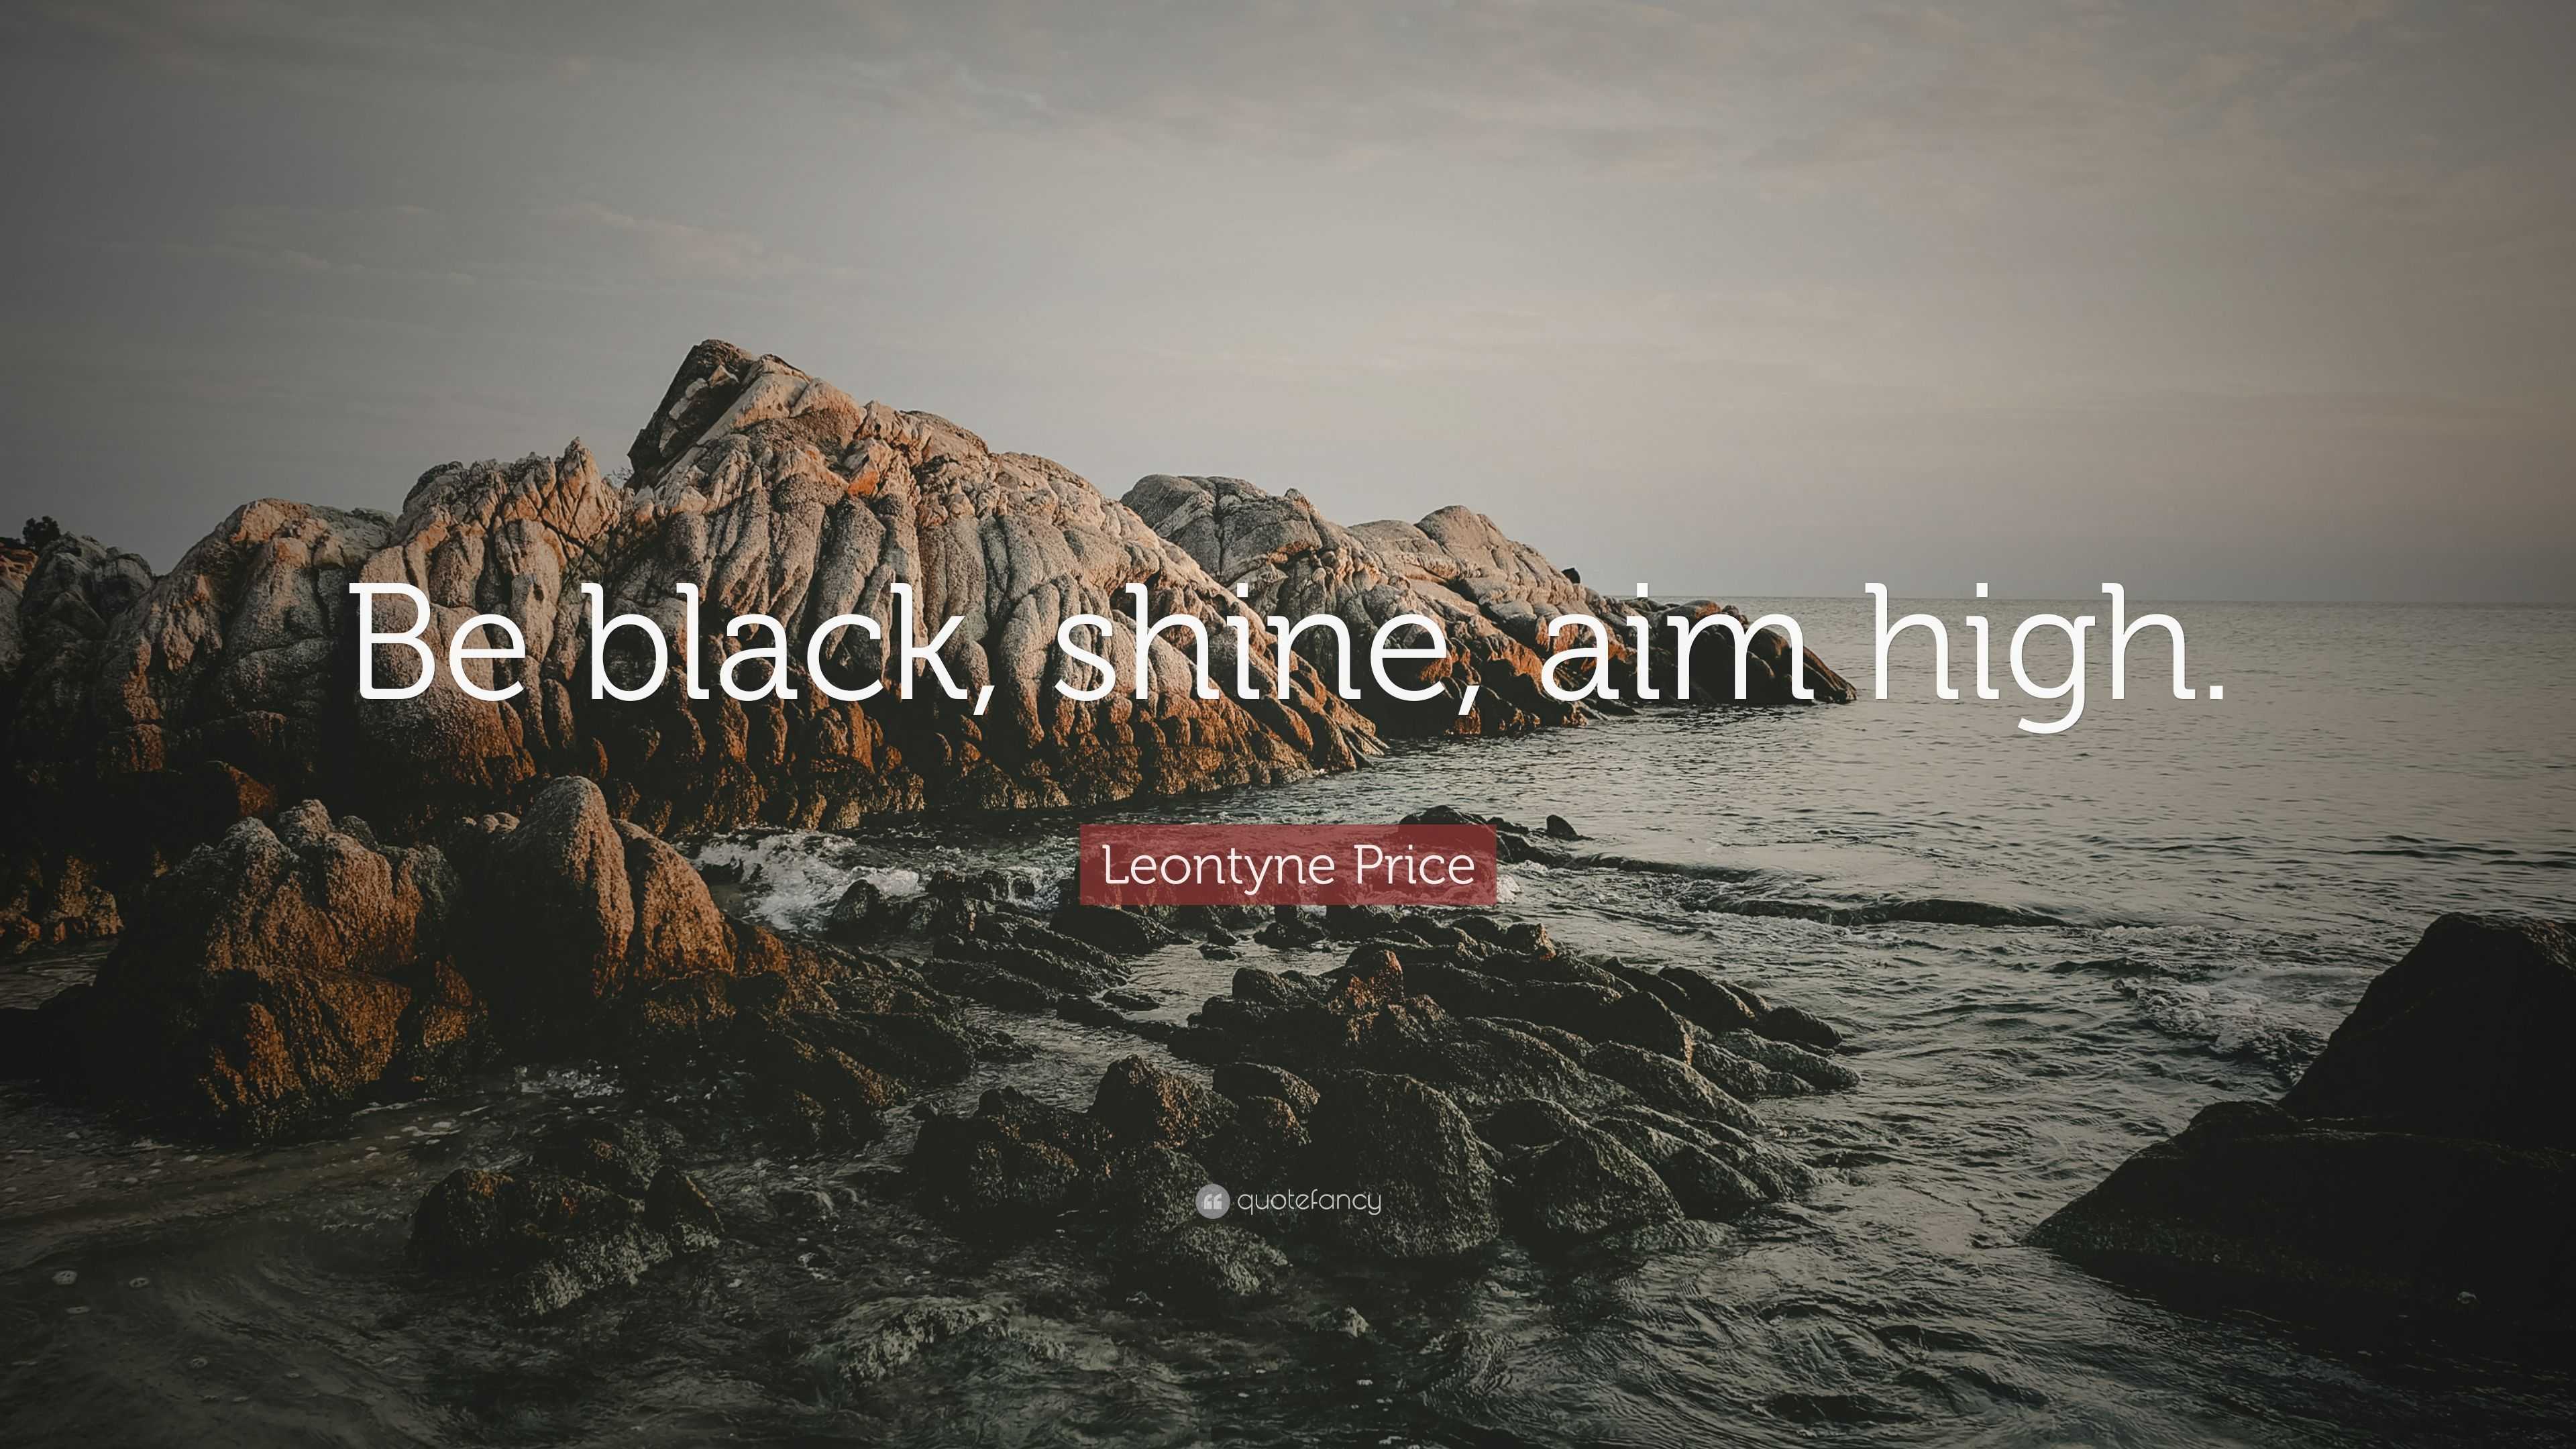 Leontyne Price Quote: “Be black, shine, aim high.”